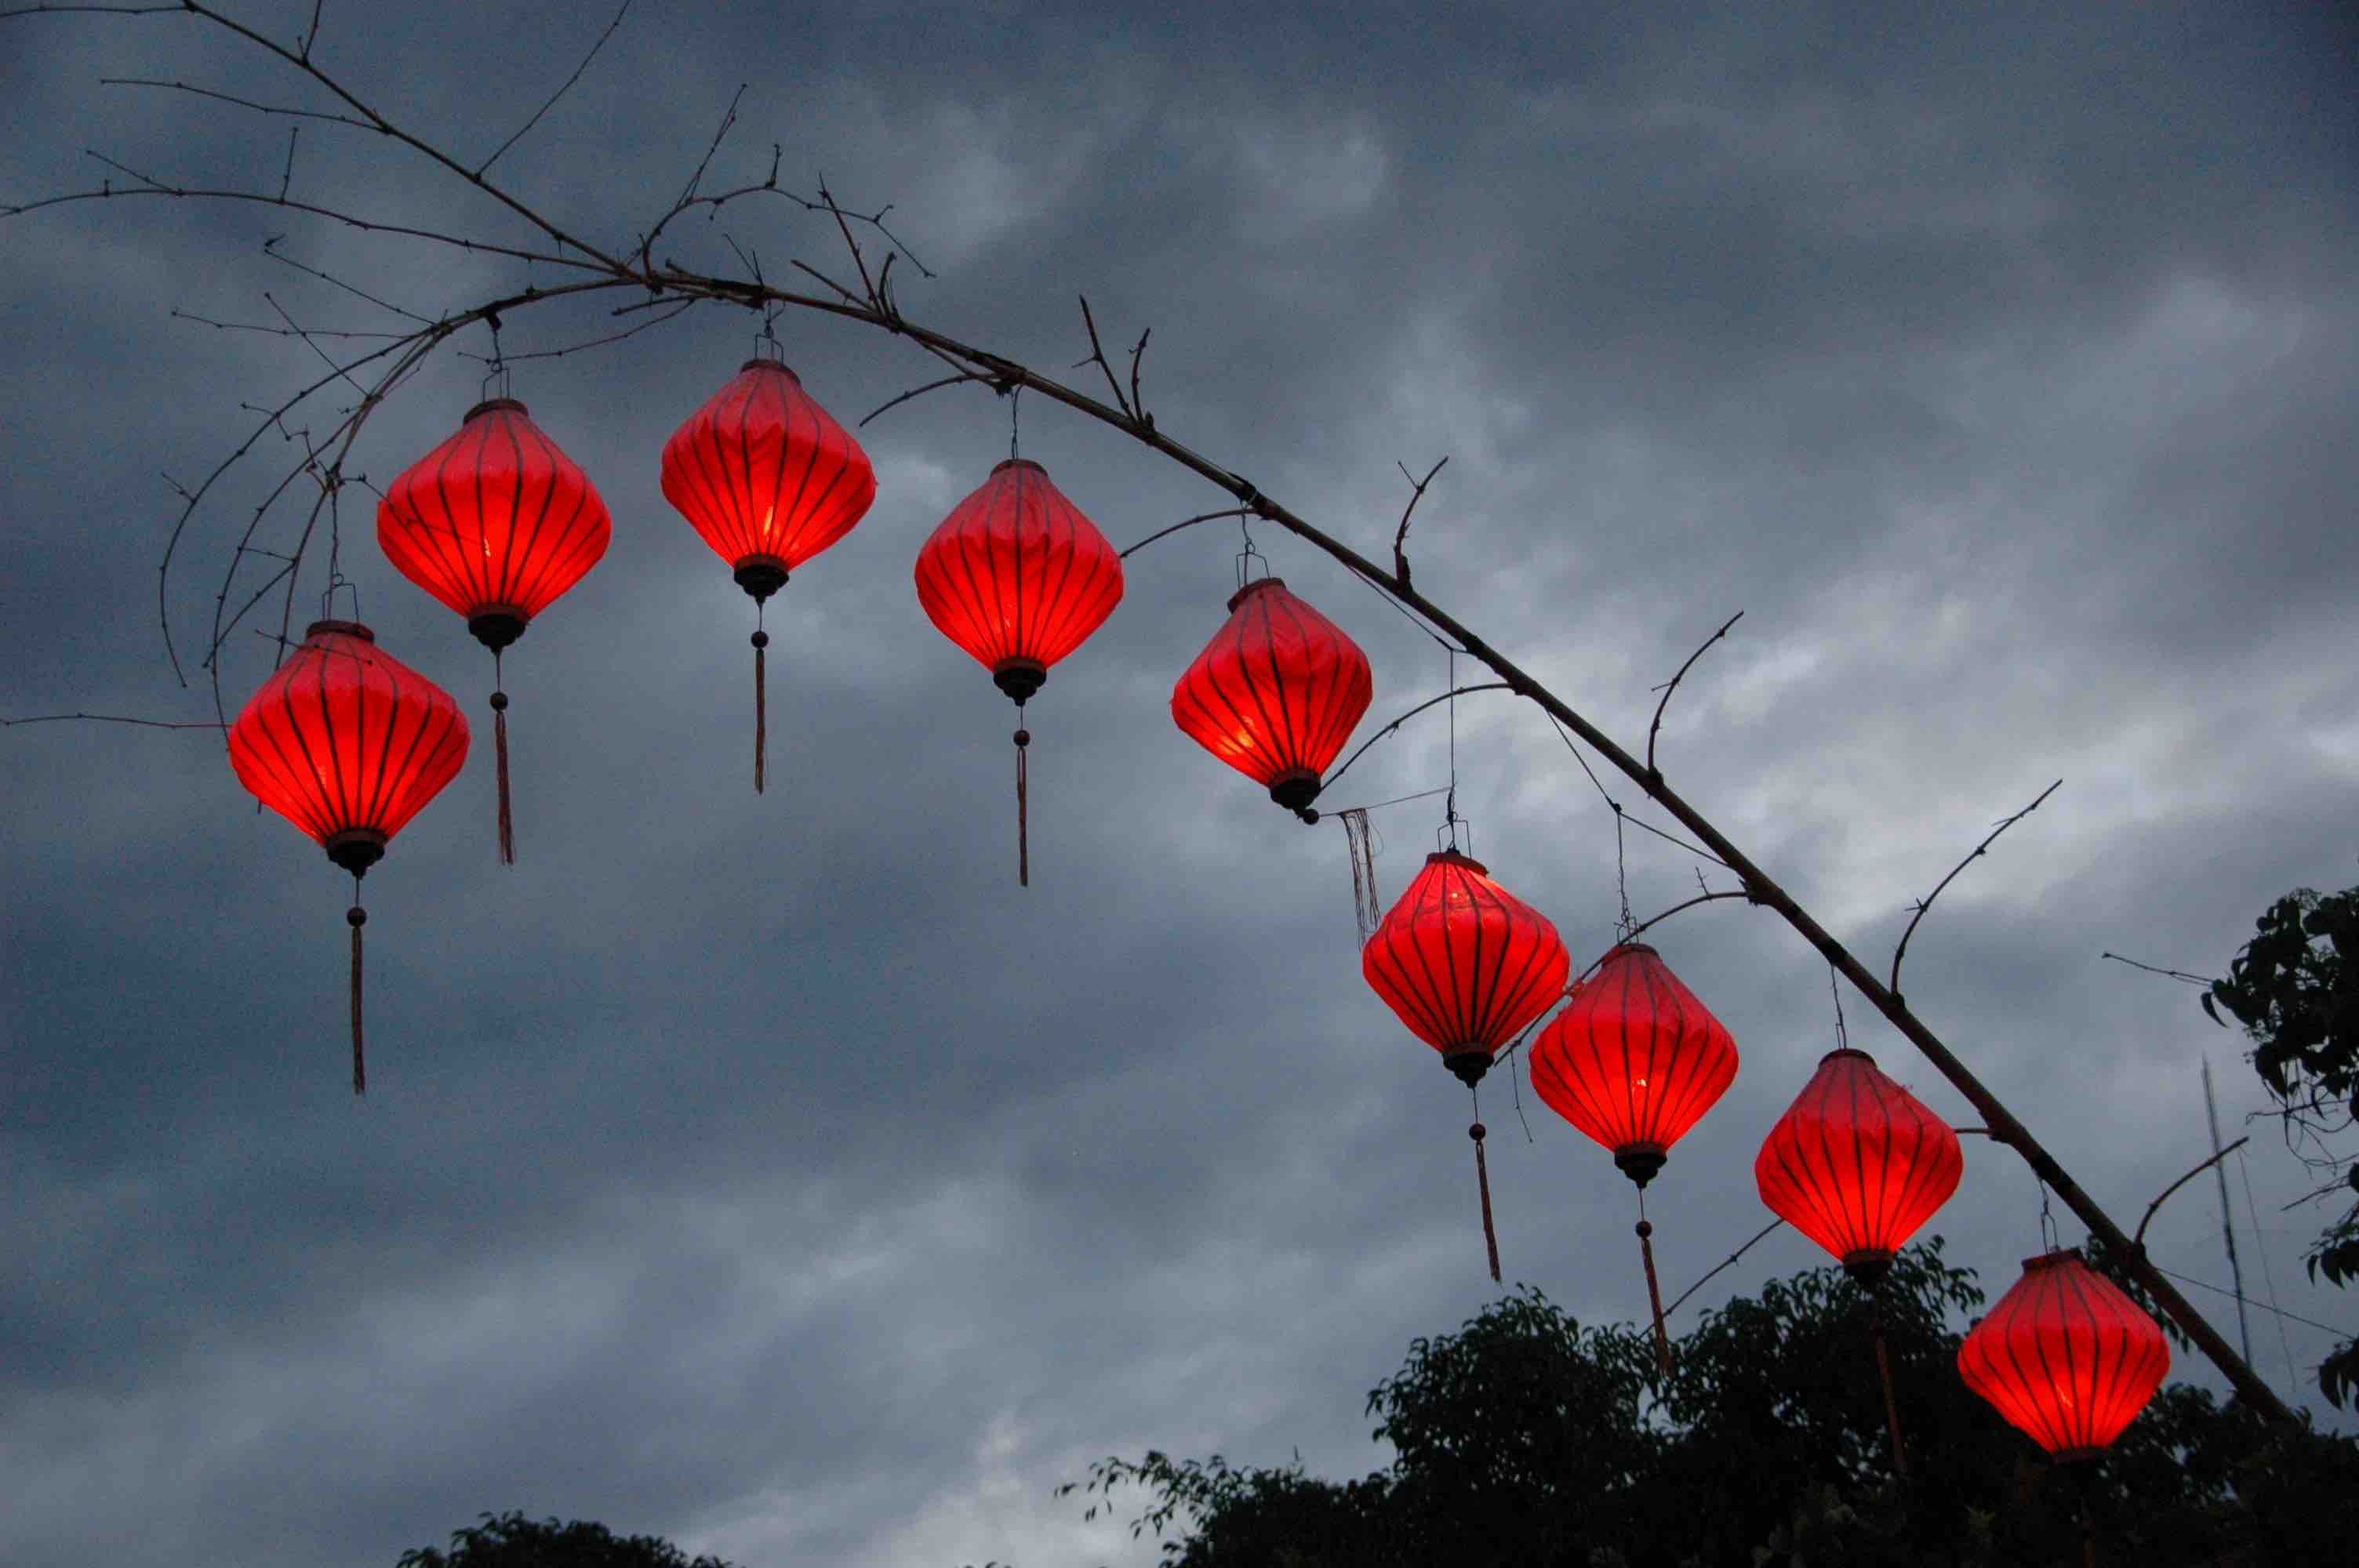 Lanterns at Hoi-An